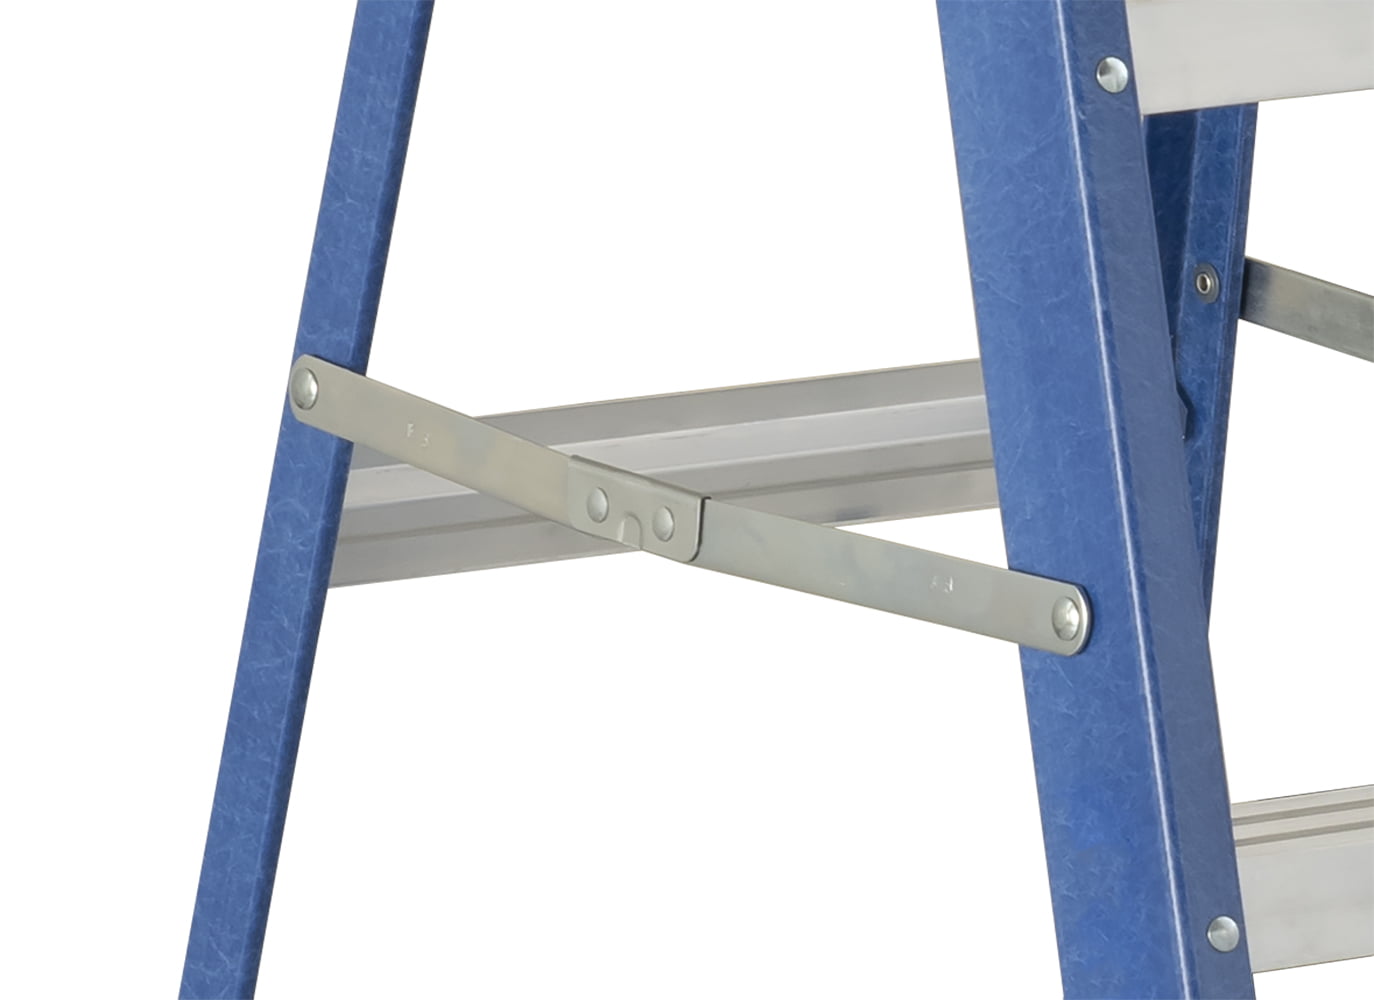 Louisville Ladder 6 ' Fiberglass Step, 10' Reach, 225-lb, Load Capacity, W-3217-06